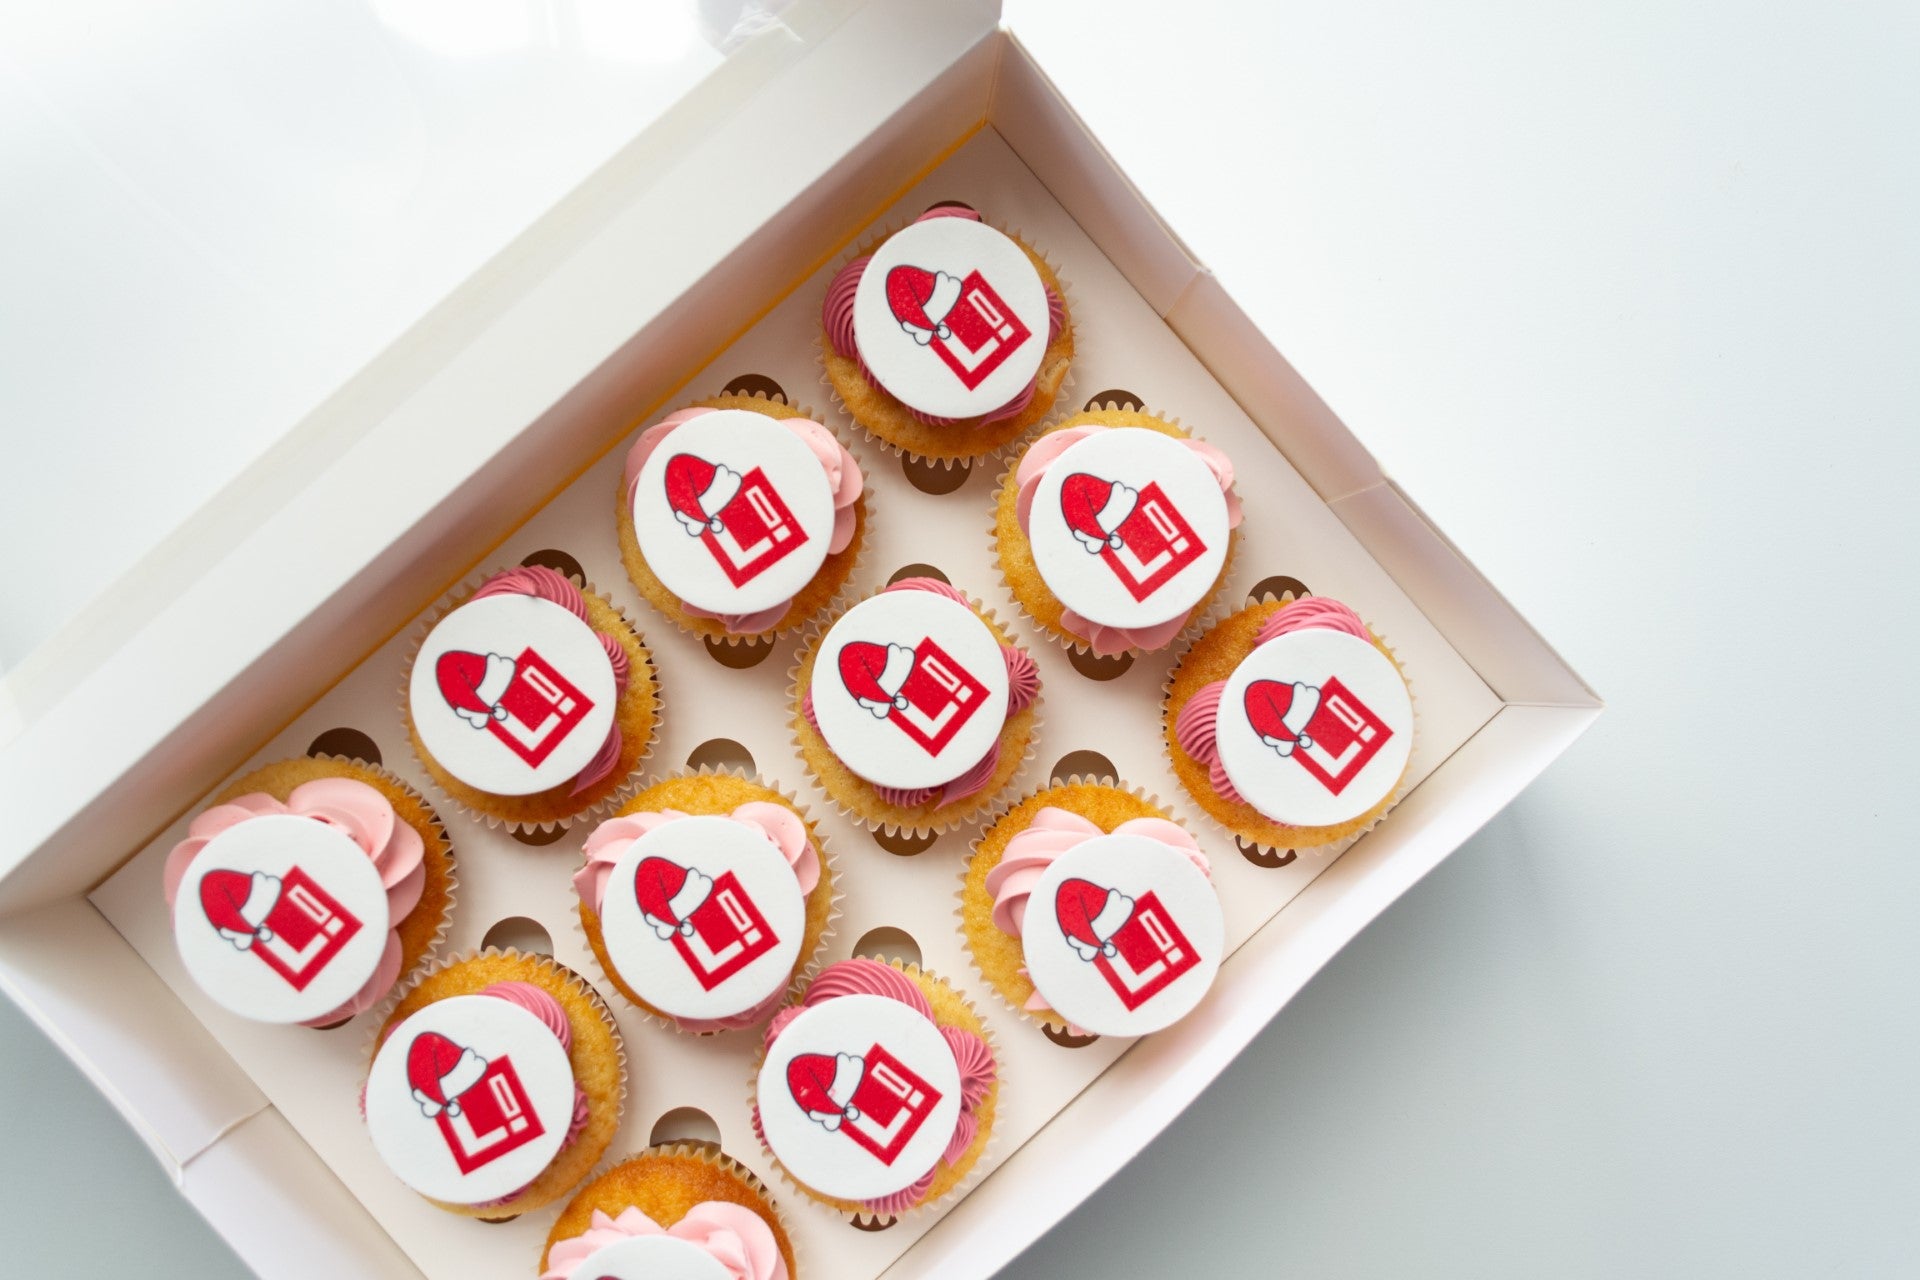 Corporate Logo Cupcakes